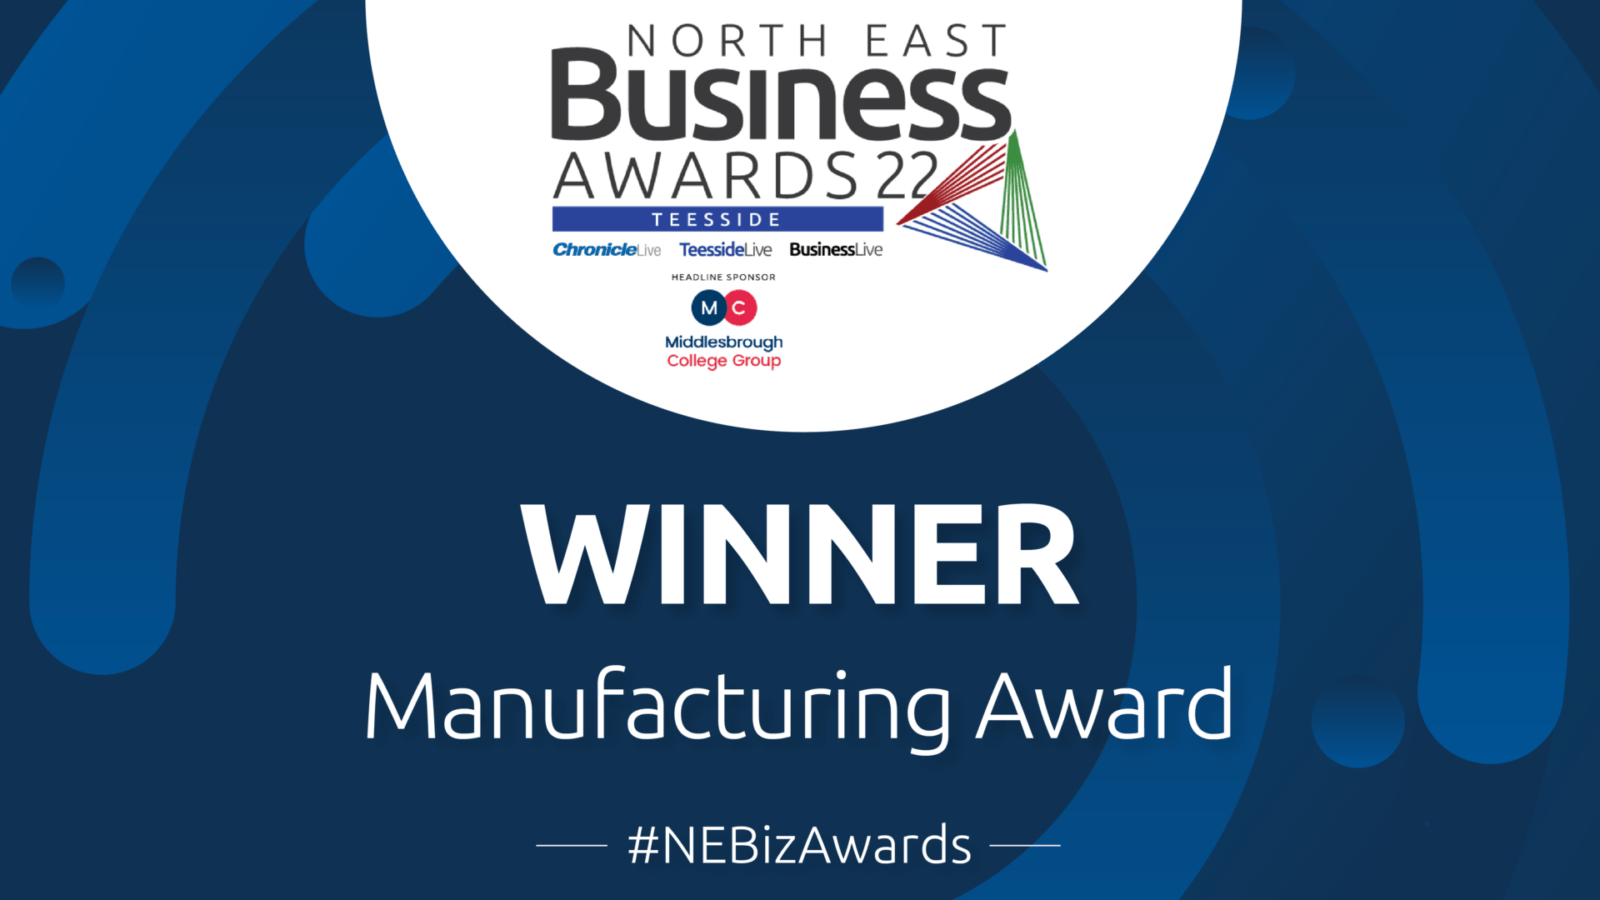 North East Business Awards 2022 Teesside | Winner Manufacturing Awards #NEBizAwards